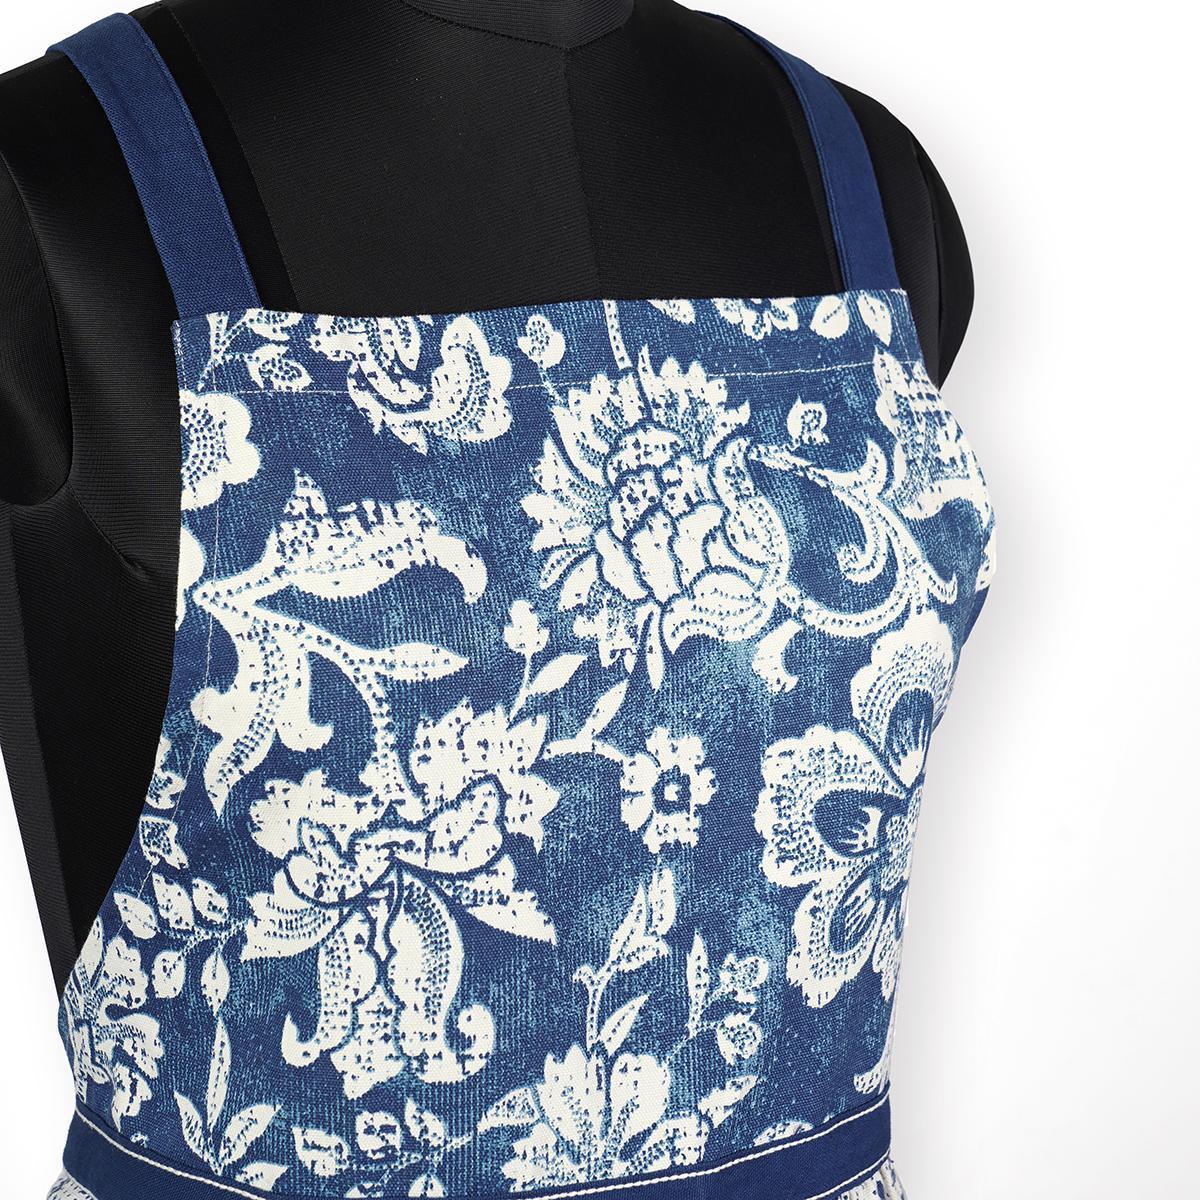 DOMINOTERIE - Indigo floral print apron, kitchen accessory, 100% cotton, size 27"X 35"